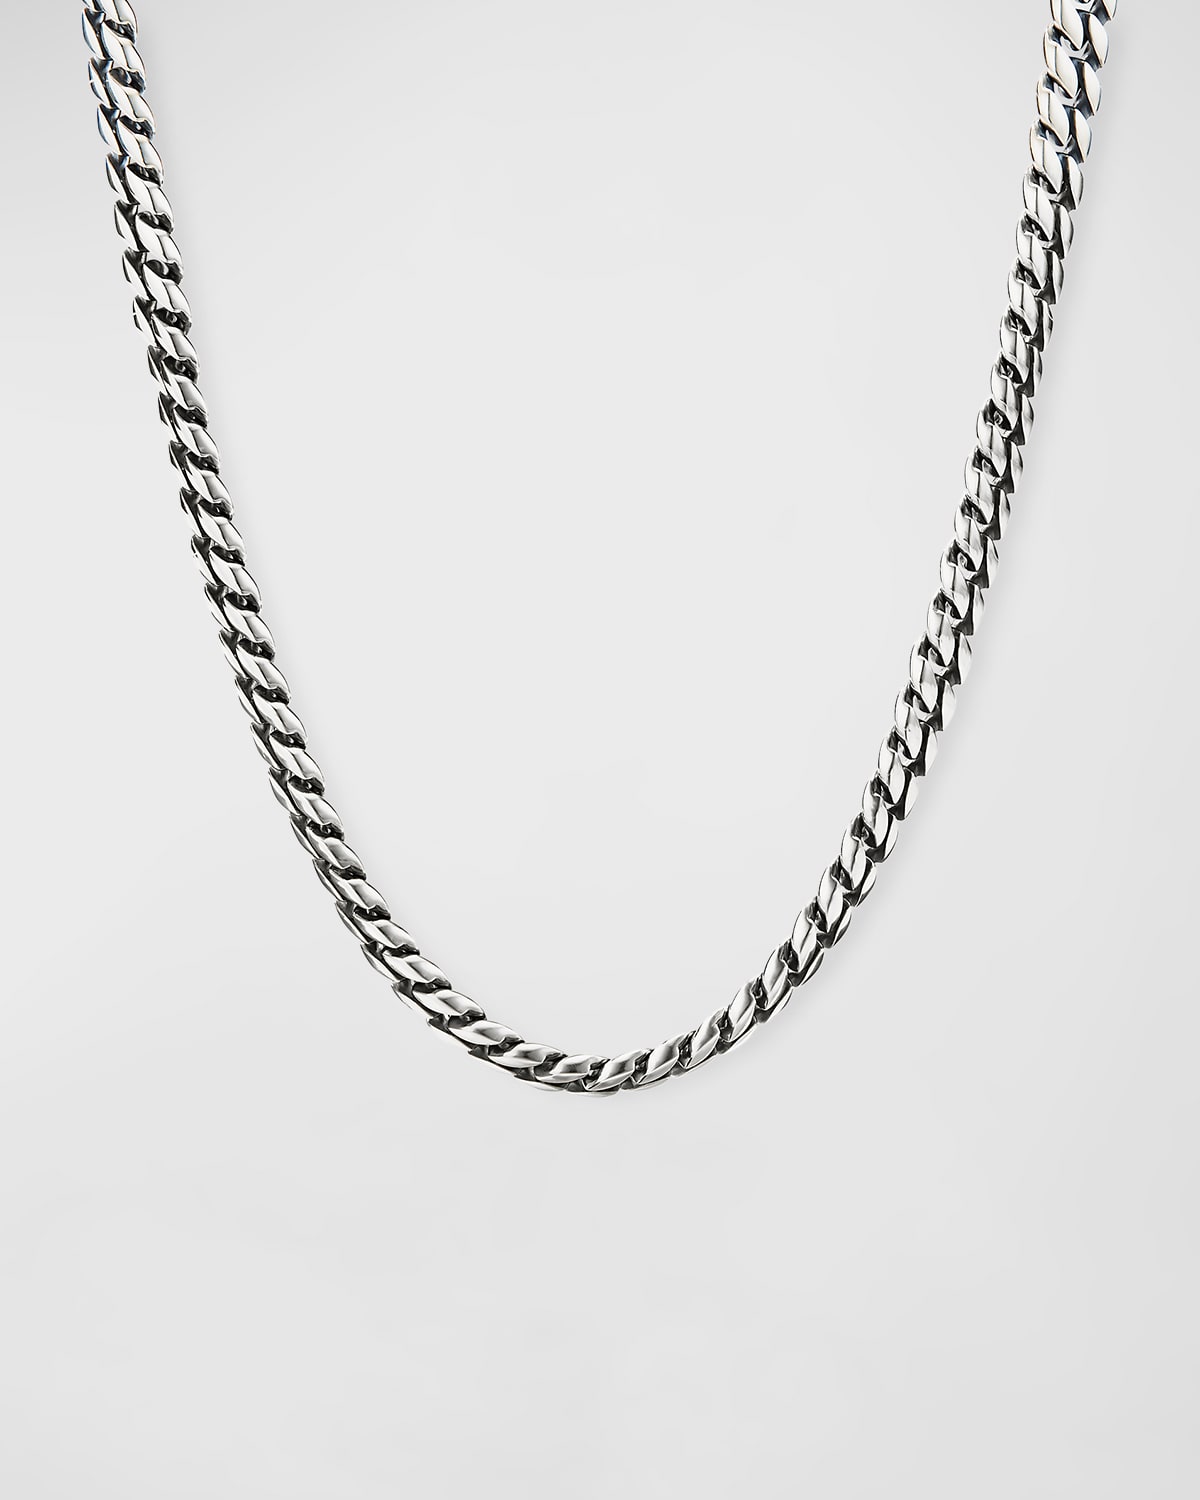 David Yurman Men's Curb Chain Necklace in Silver, 8mm, 22